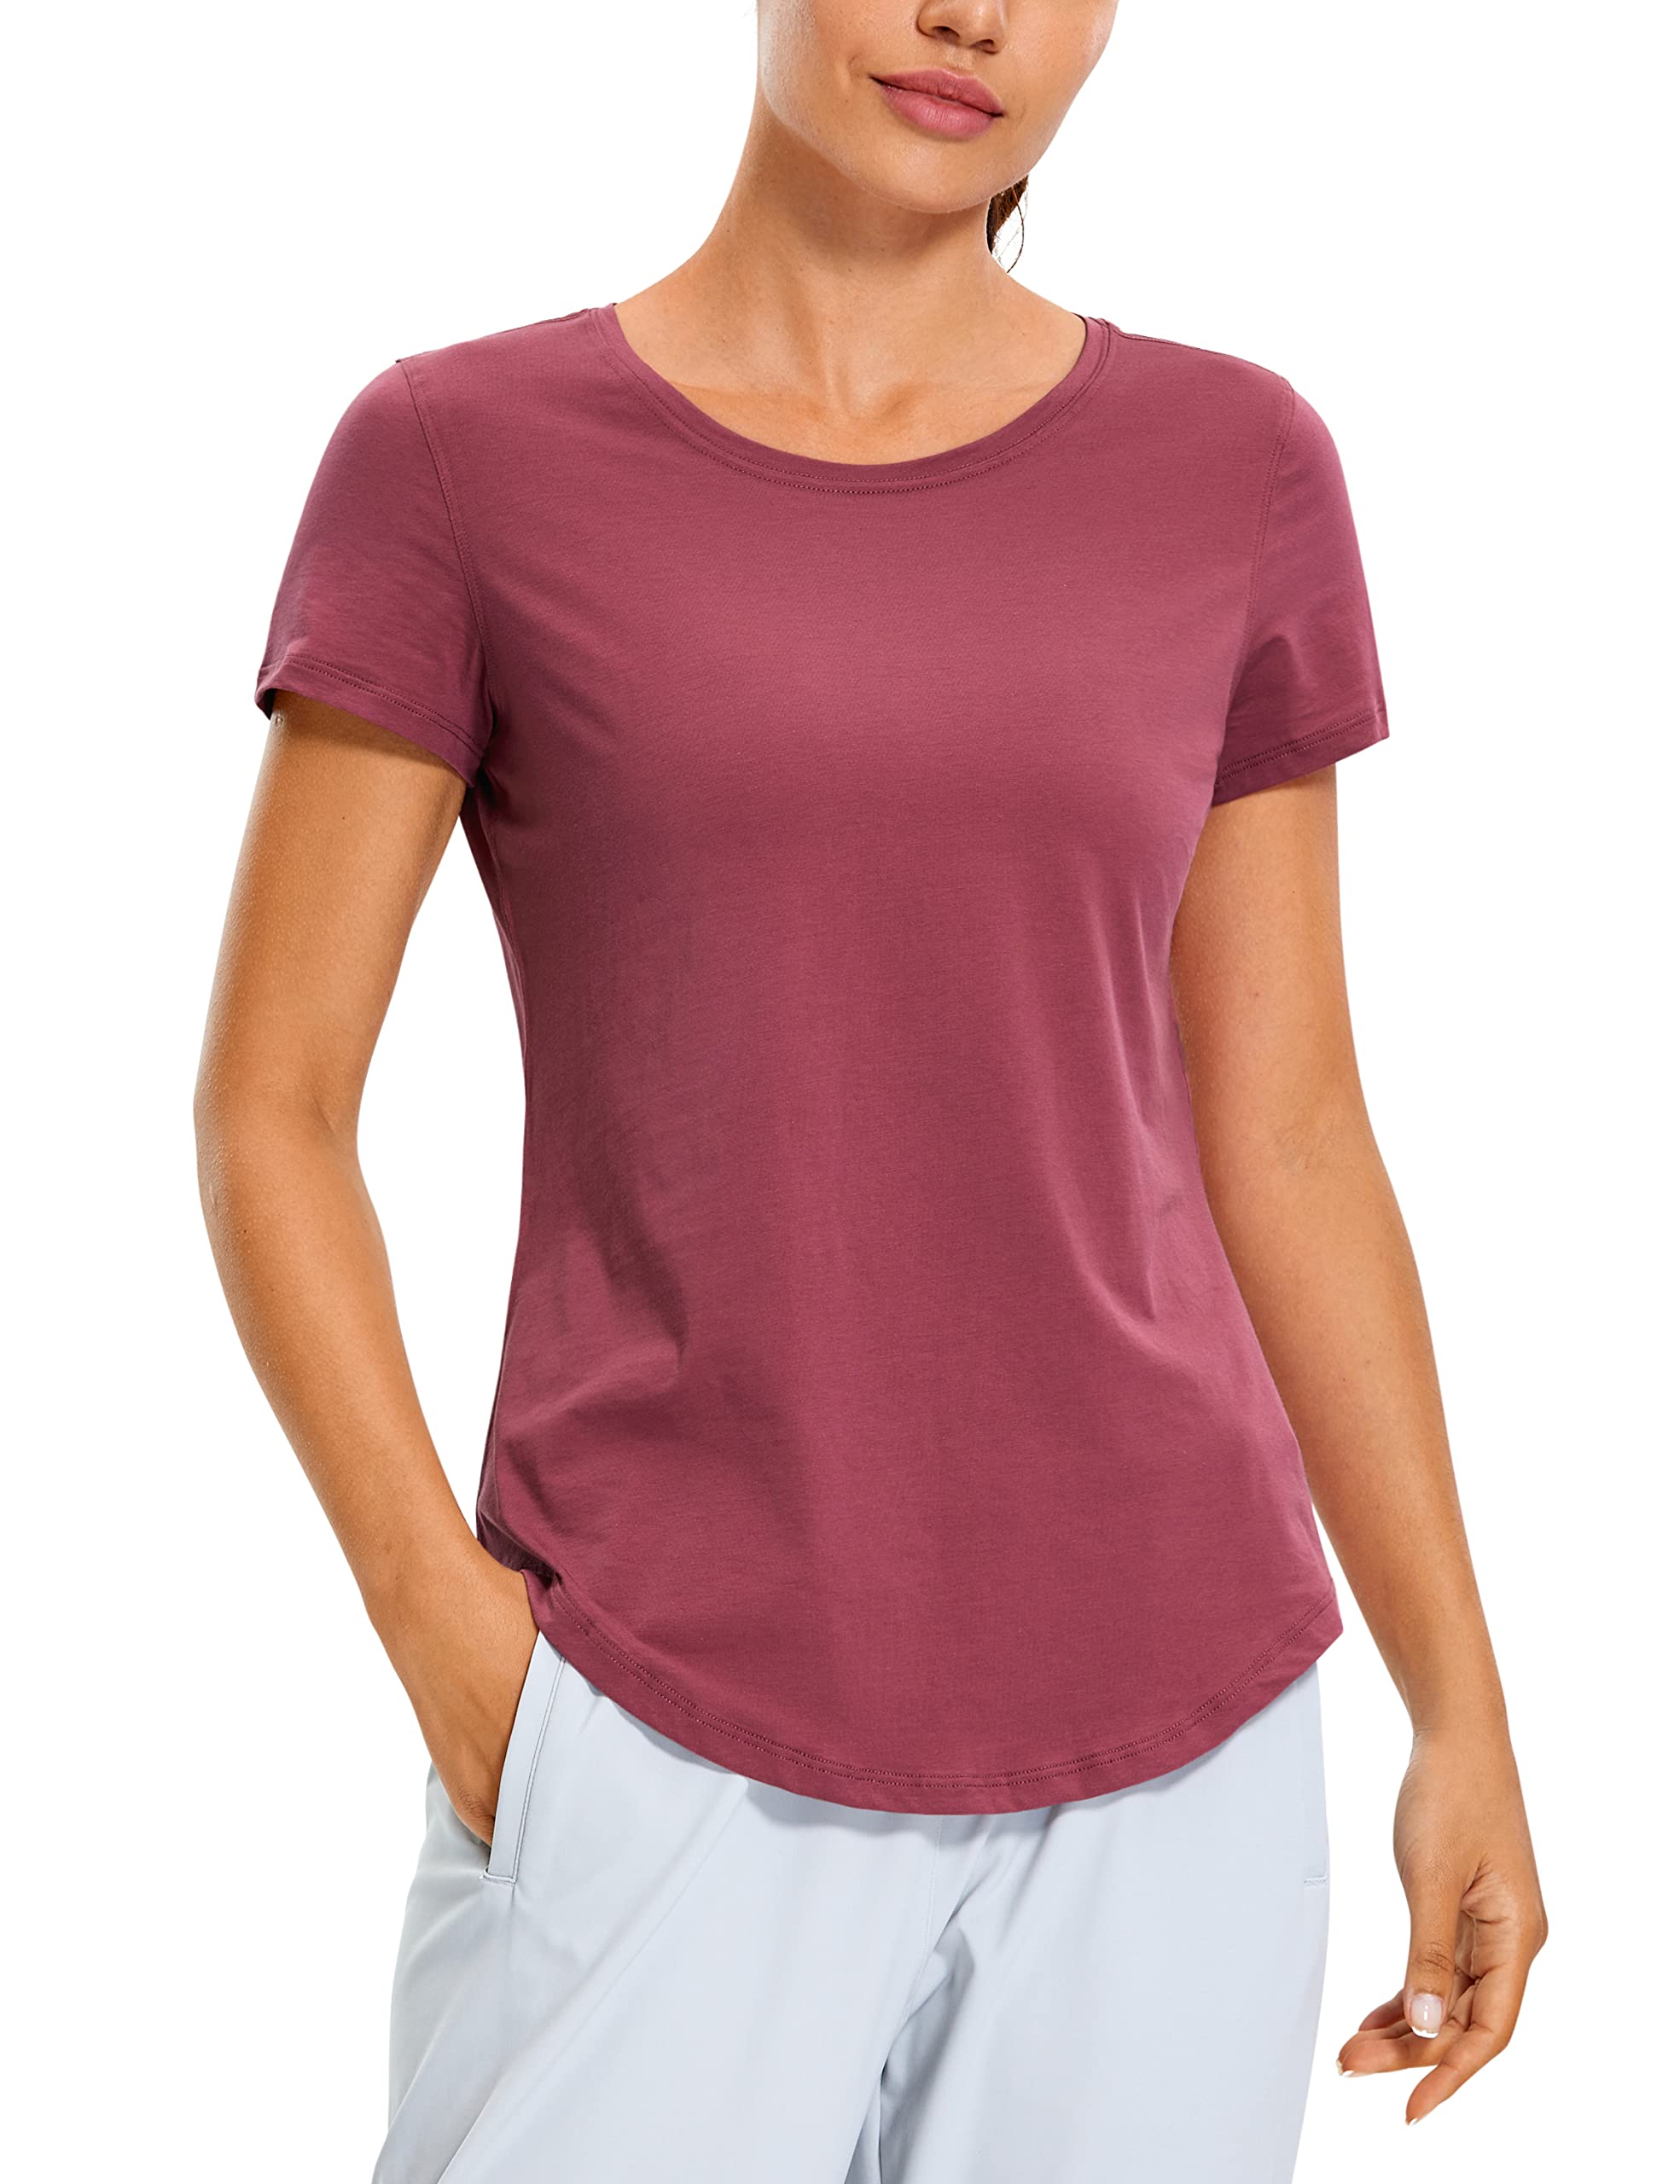 CRZ Yoga Purple Pima Cotton Long-Sleeve Open Criss-Cross Back Top Small